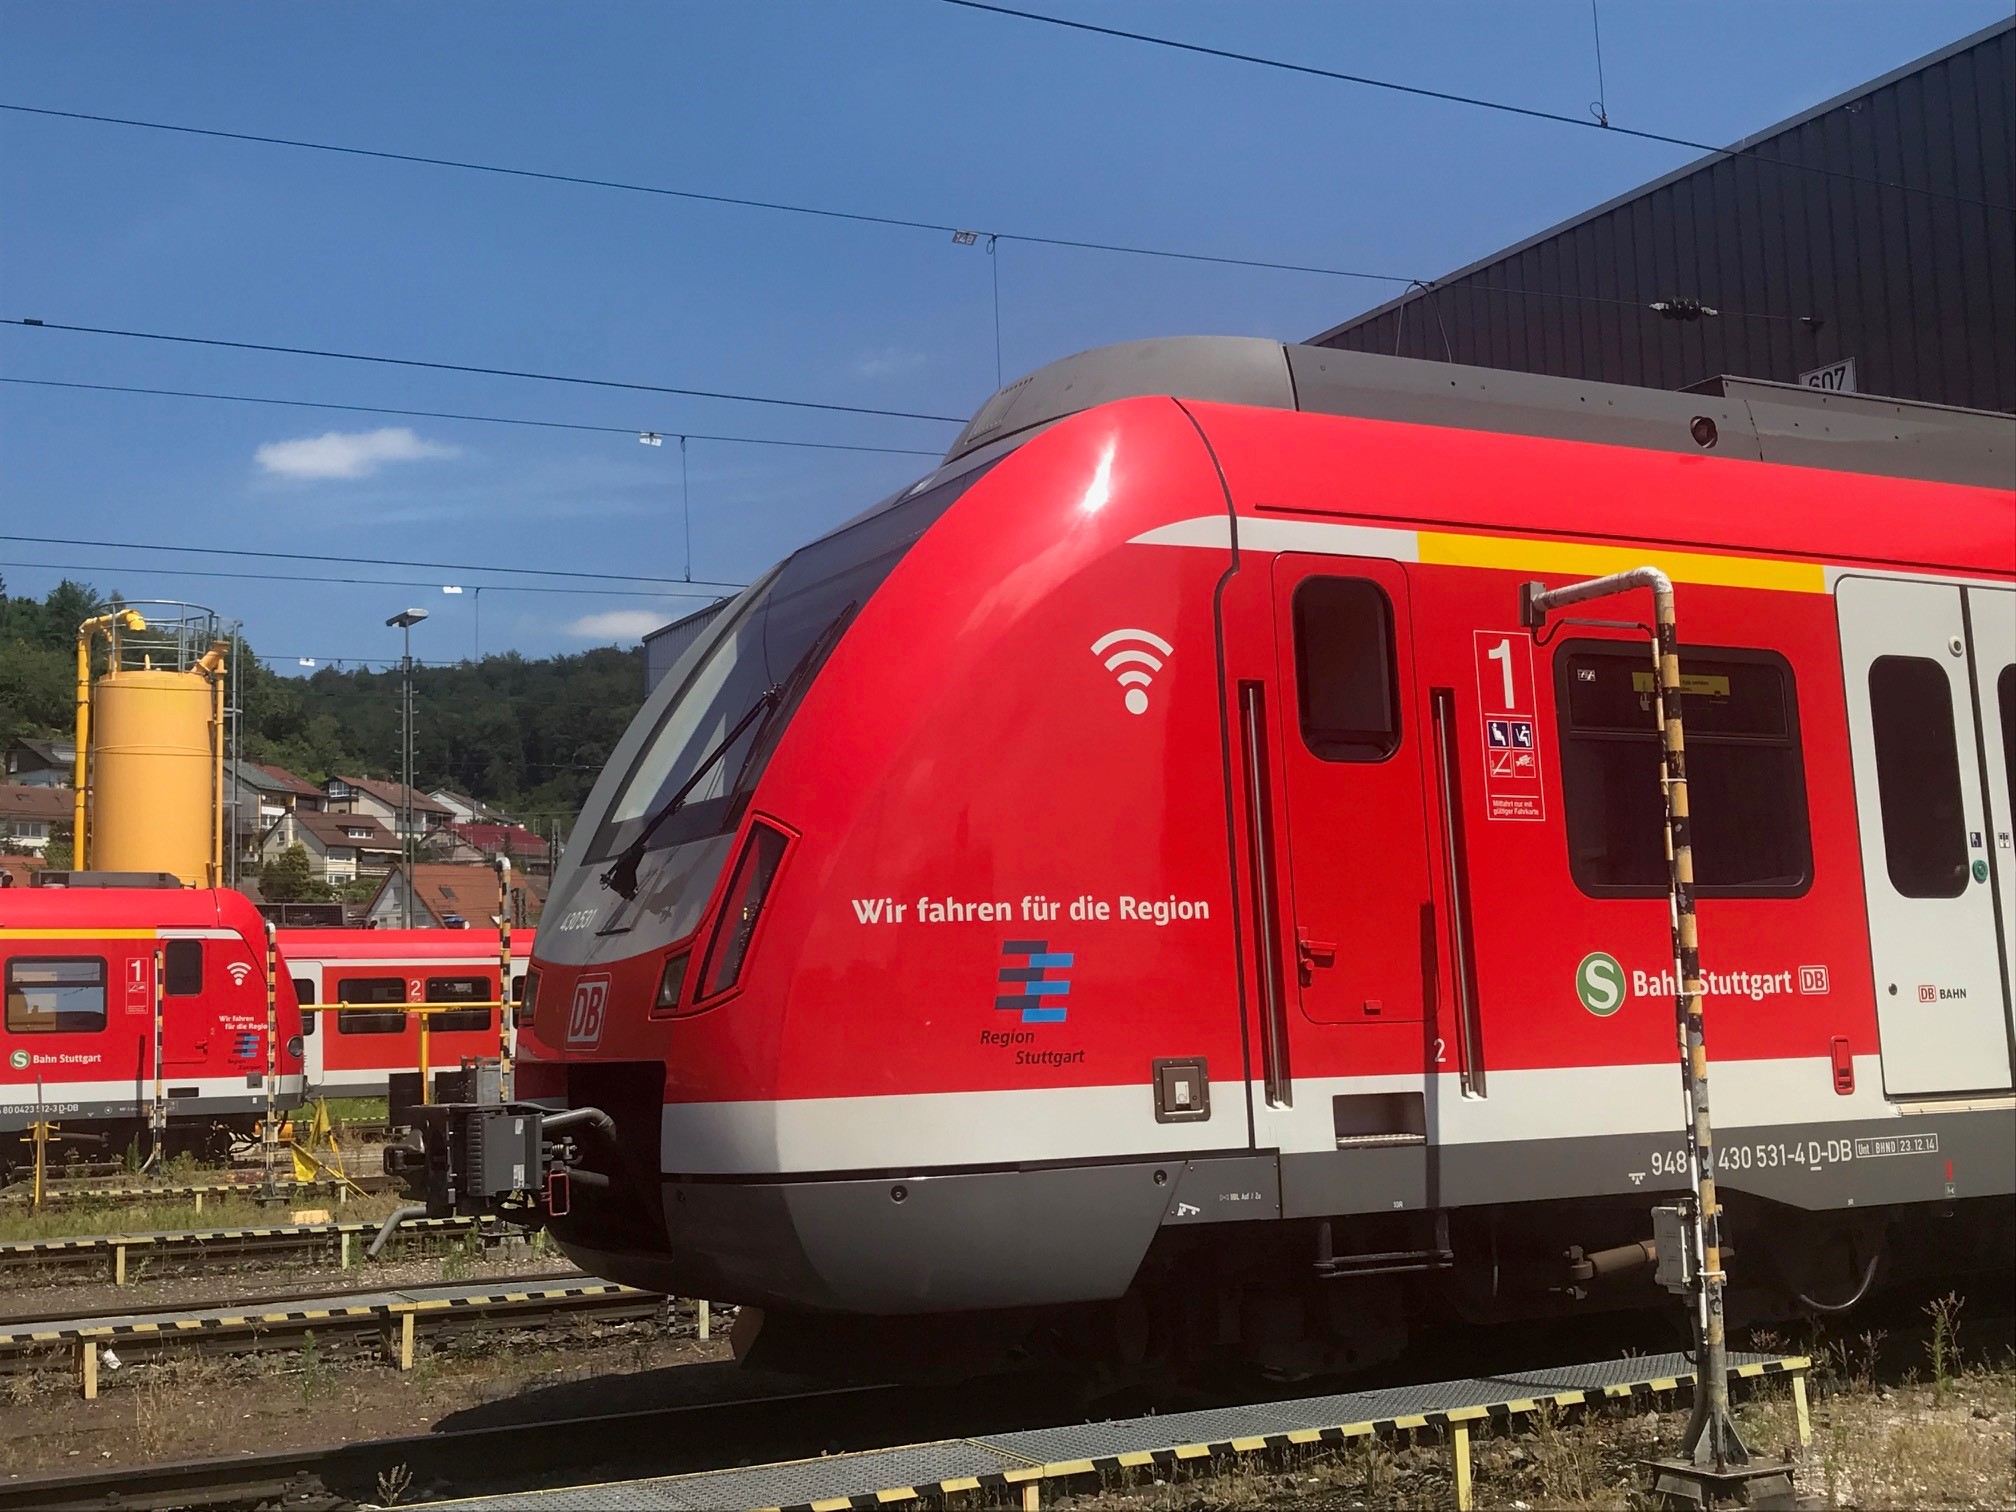 SBahn Stuttgart Deutsche Bahn AG